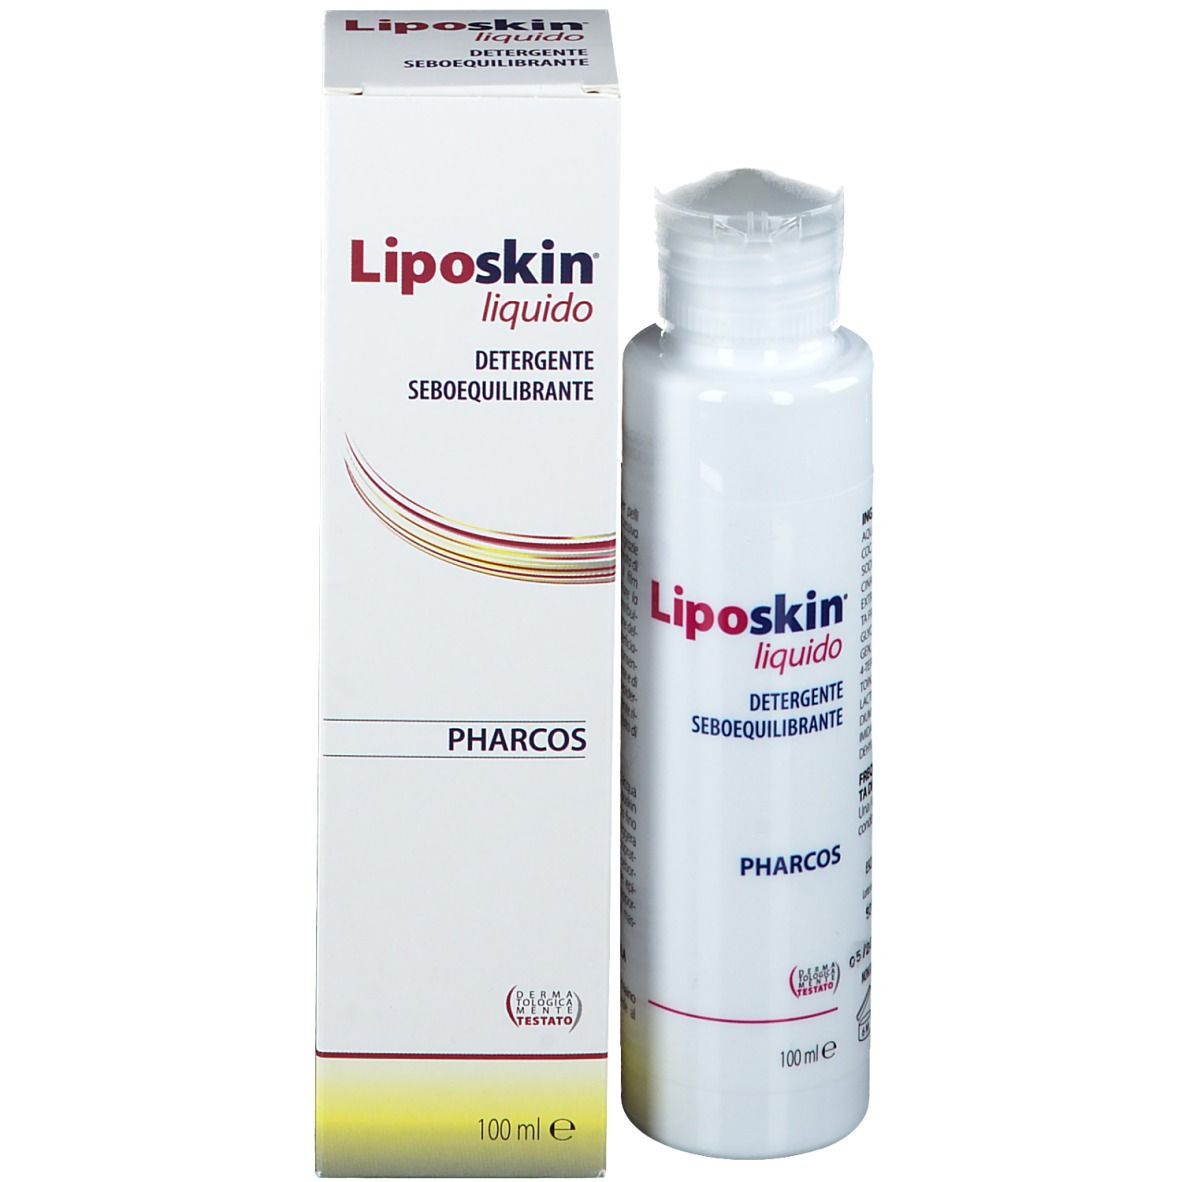 Liposkin(R) Liquido Pharcos 100ml